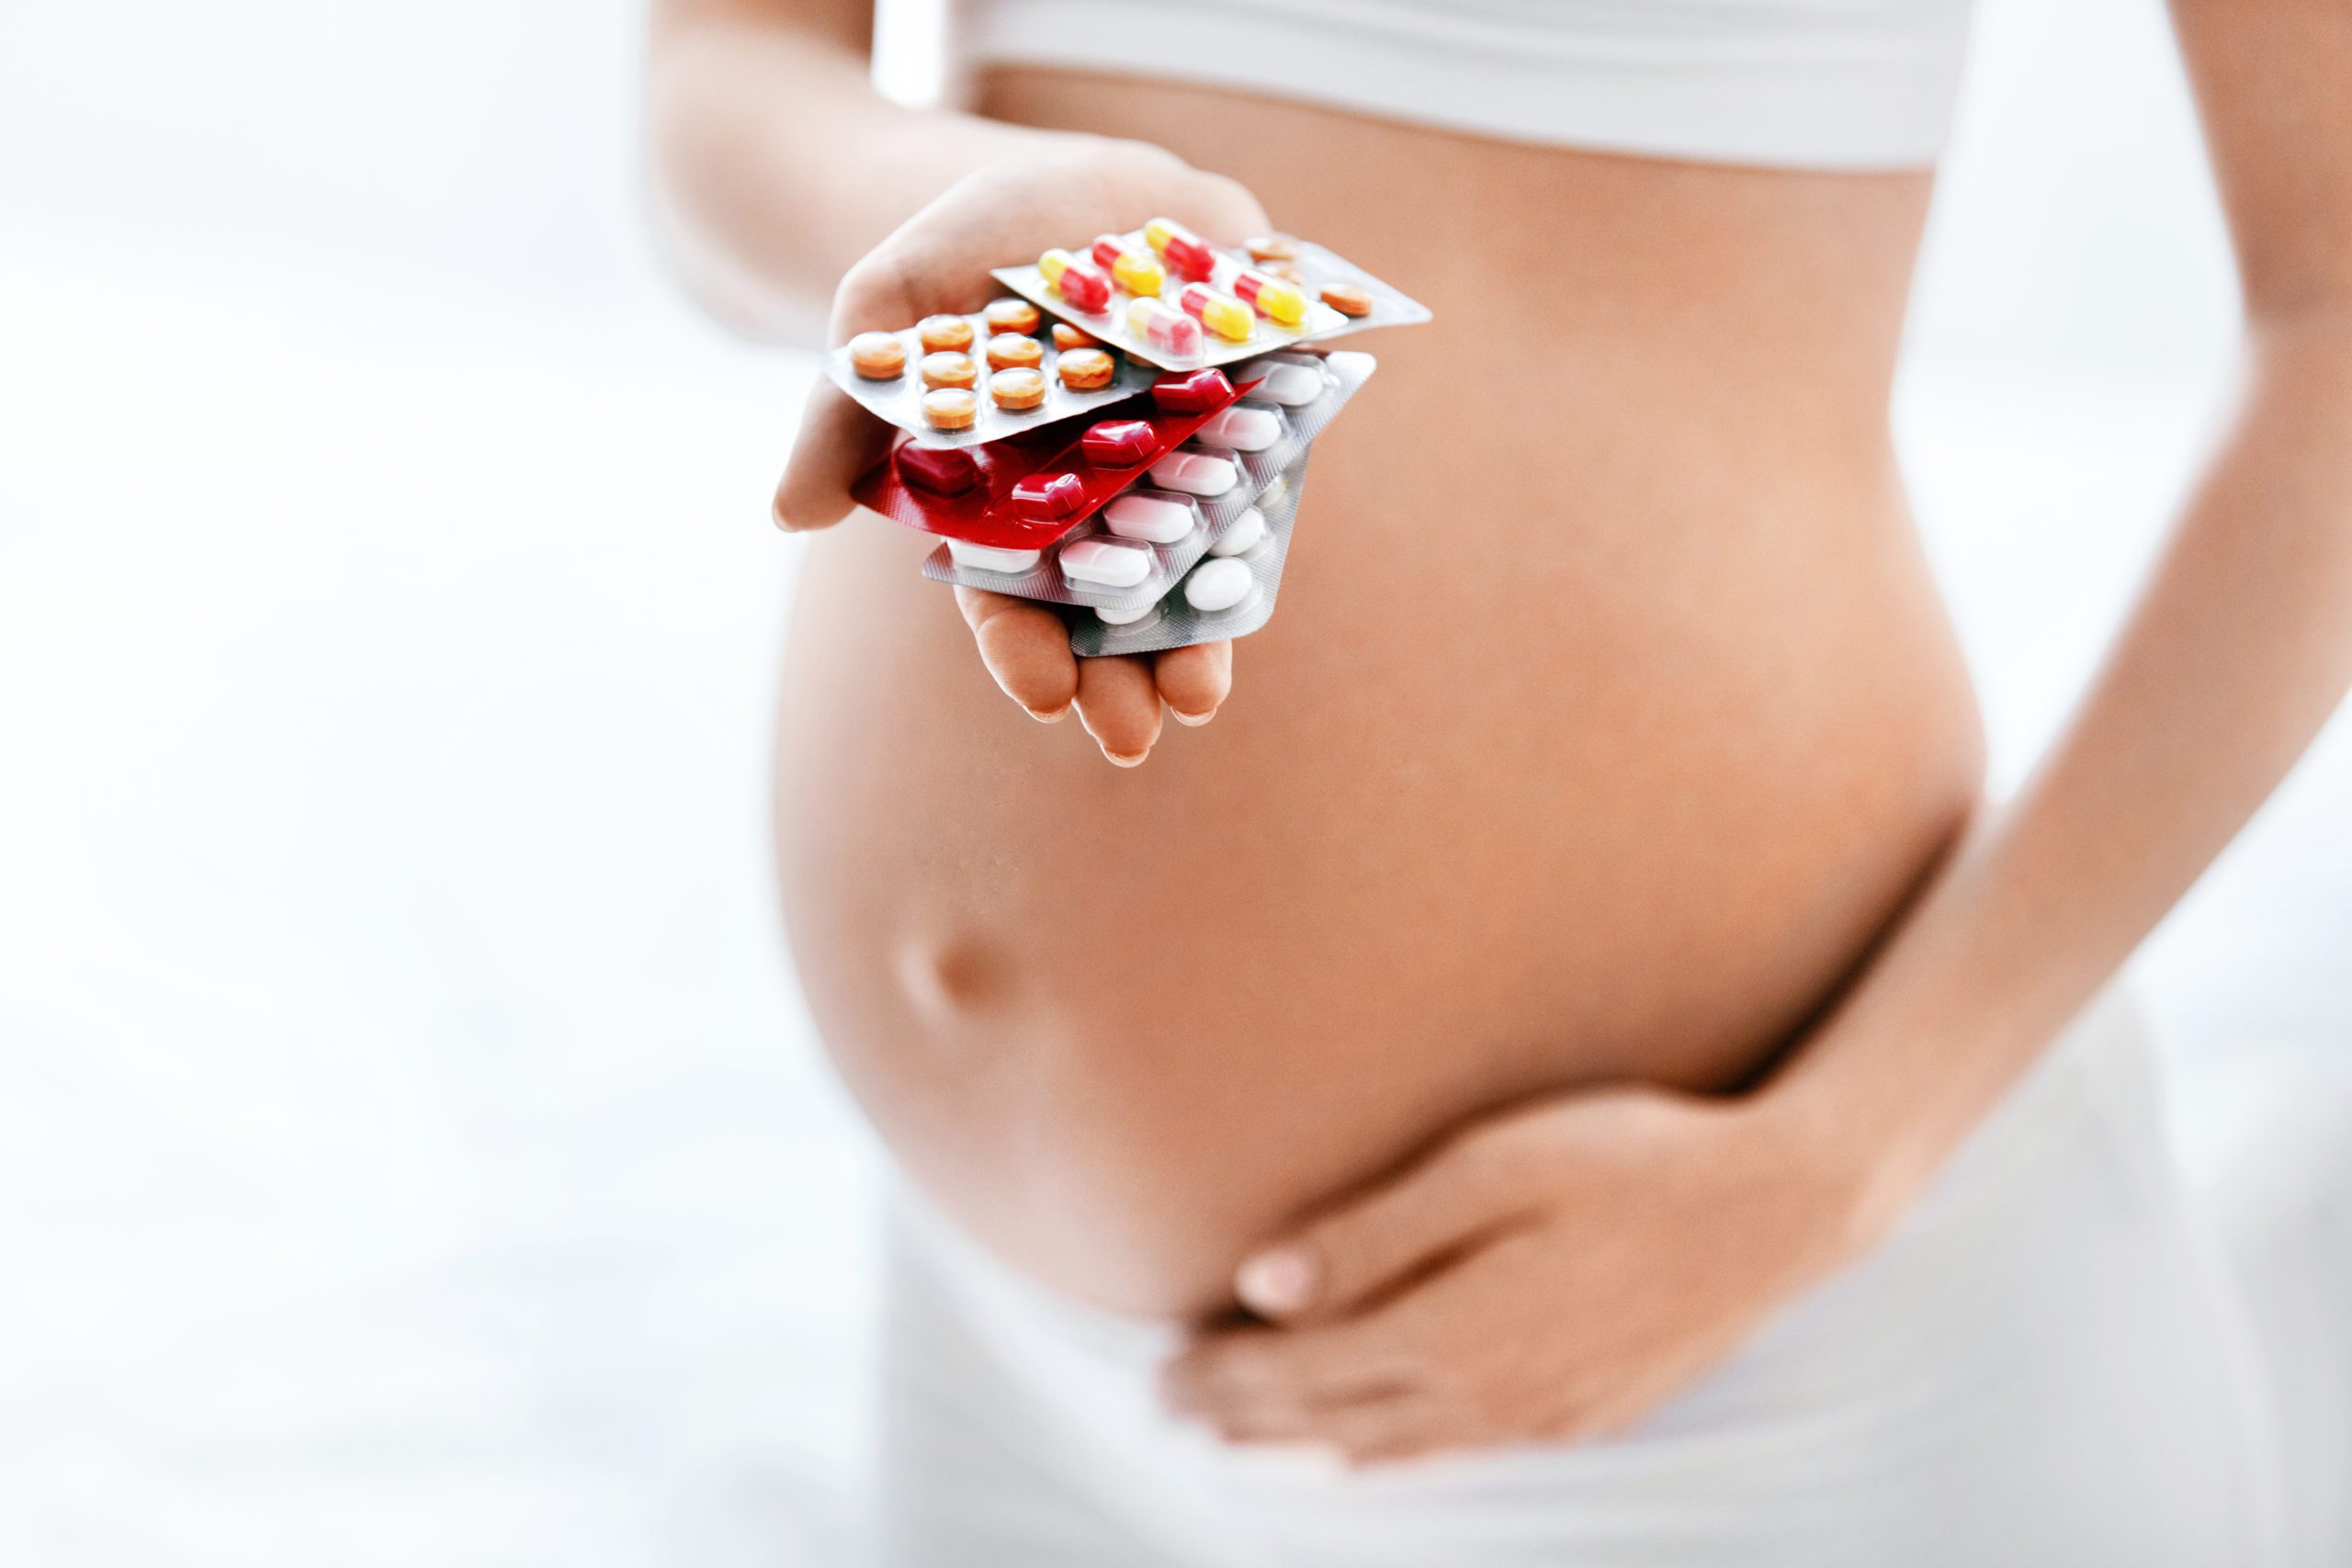 pregnancy supplements